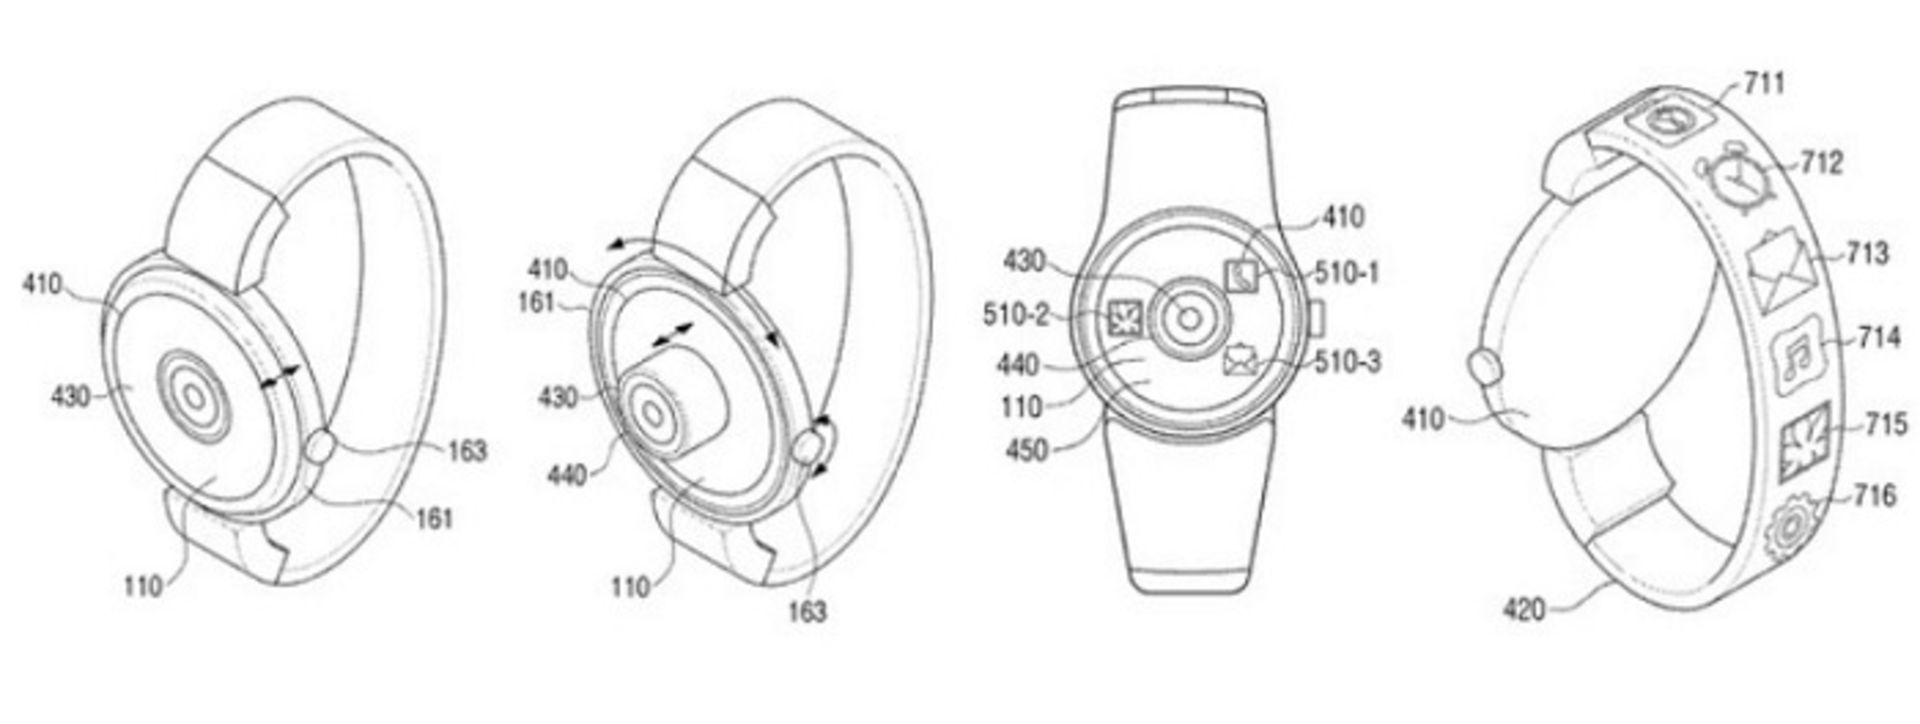 samsung patent smart watch